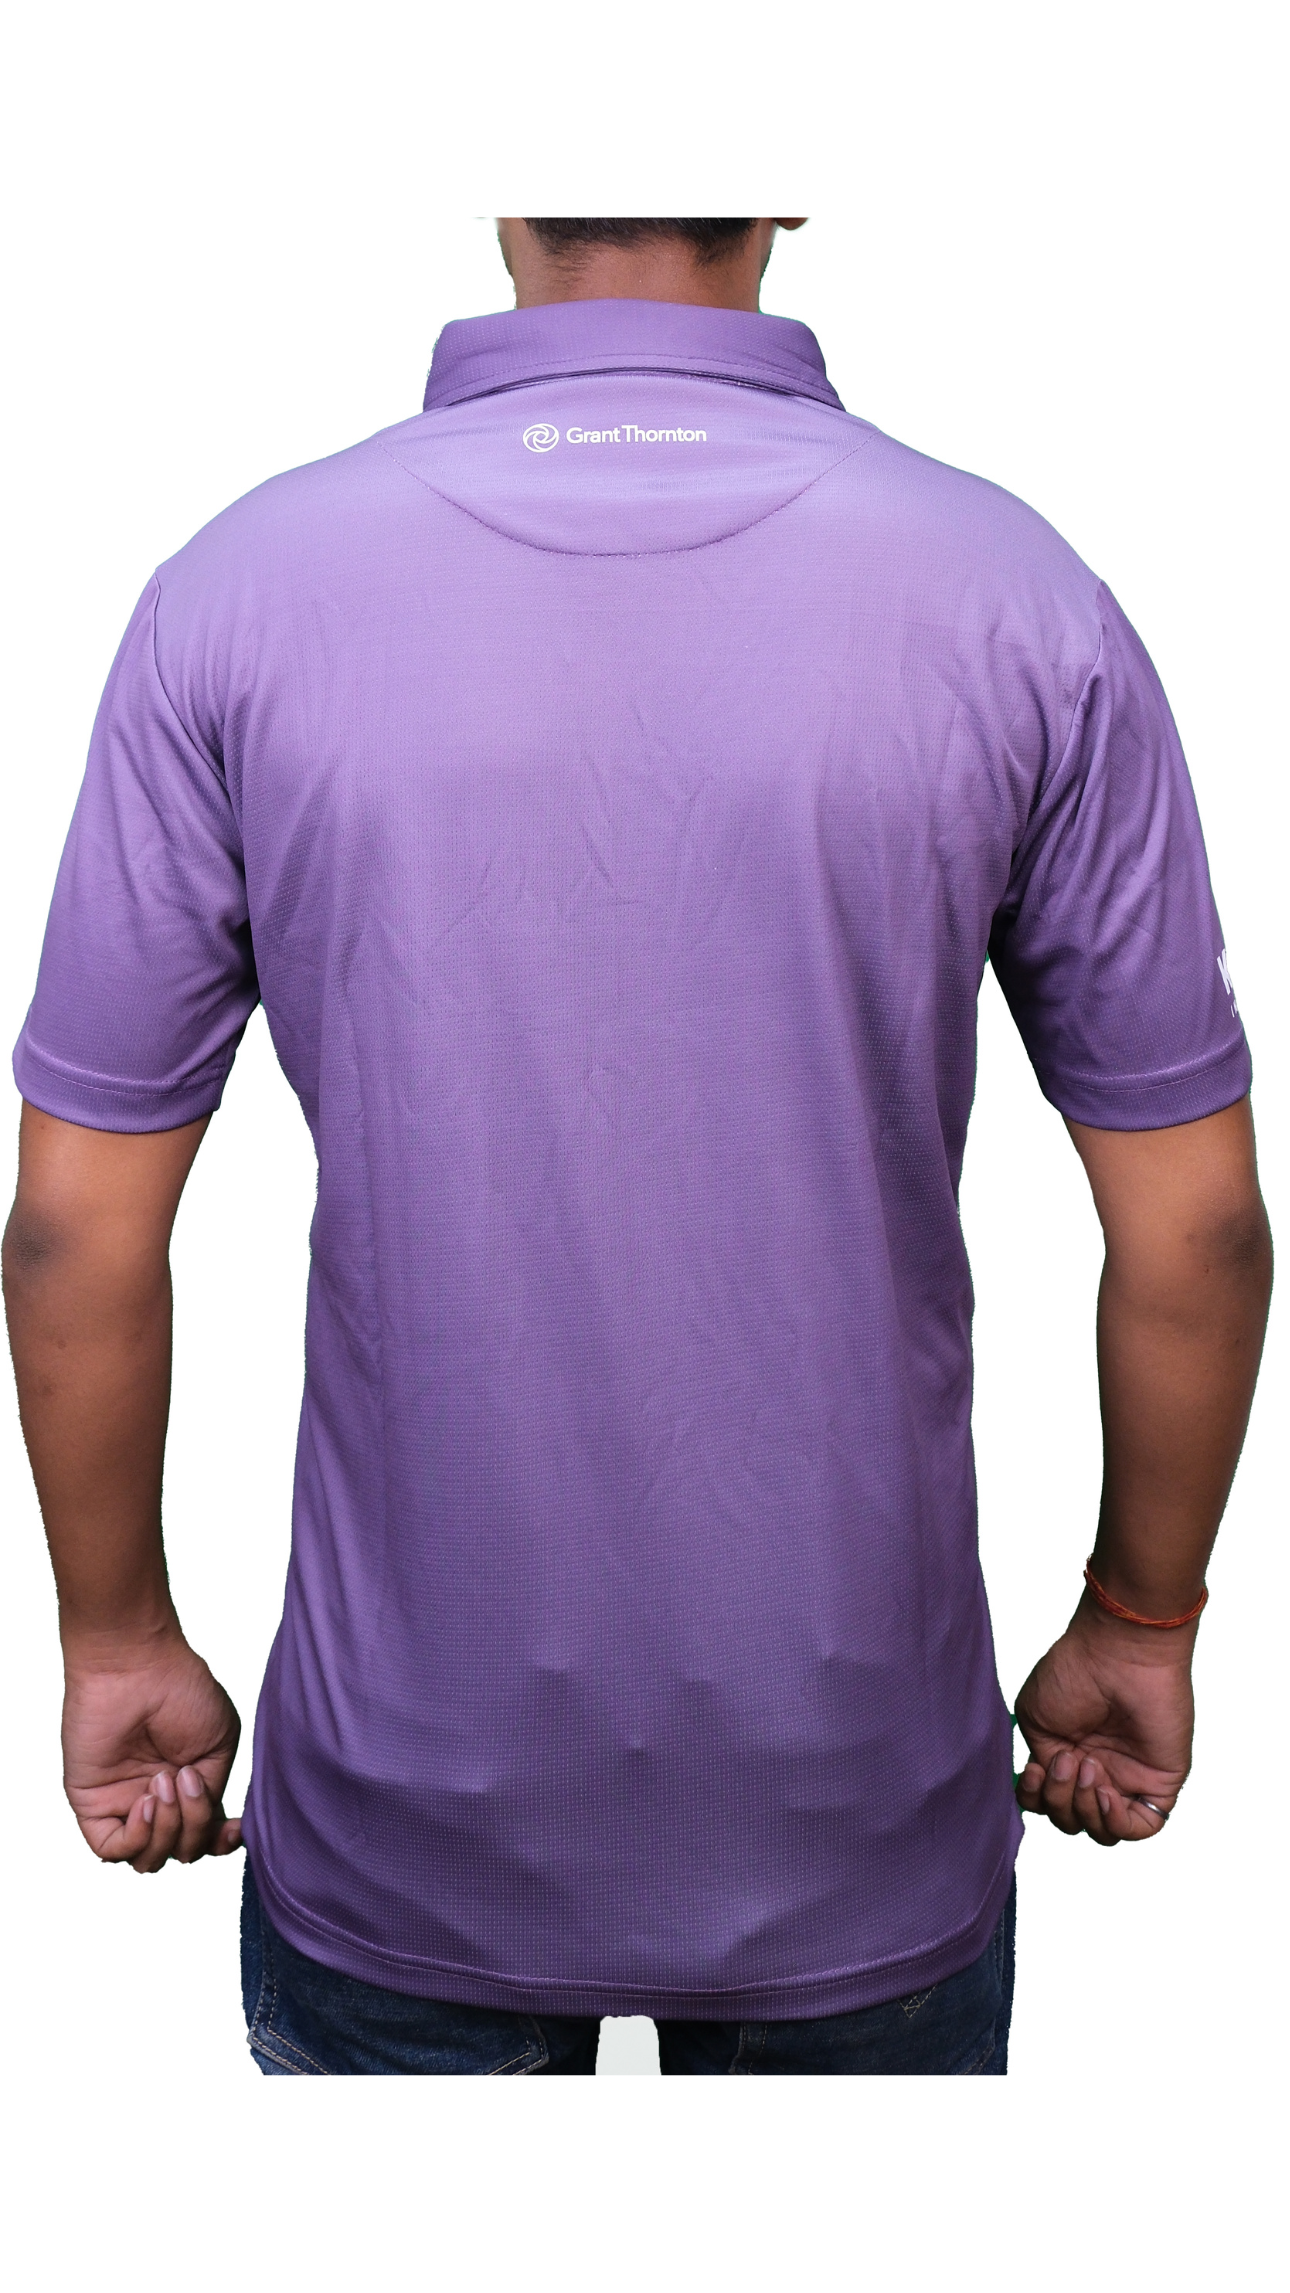 Athletic Drive purple t-shirt